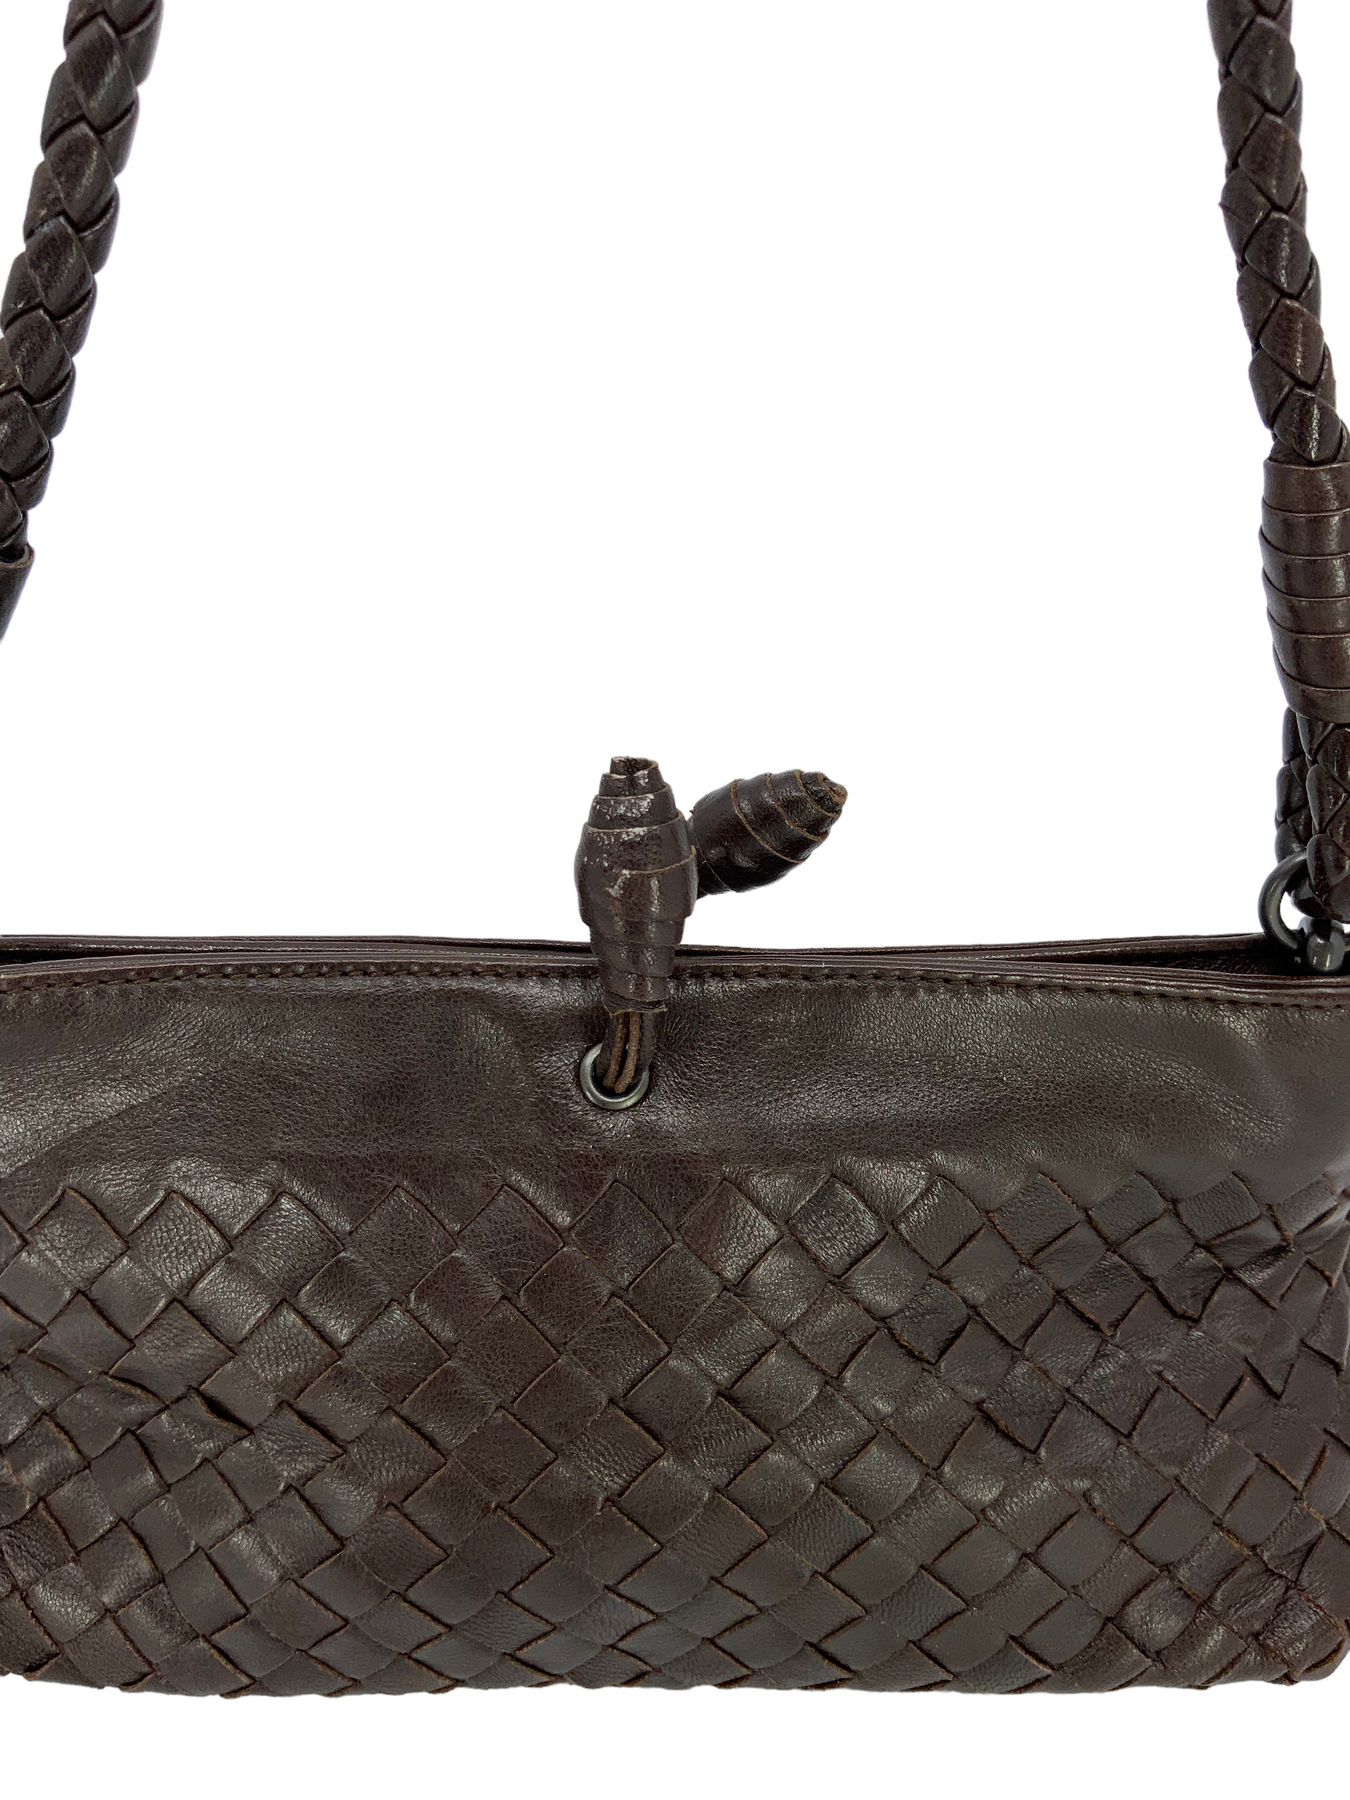 Bottega Veneta Silver Intrecciato Woven Leather Tote Shoulder Bag